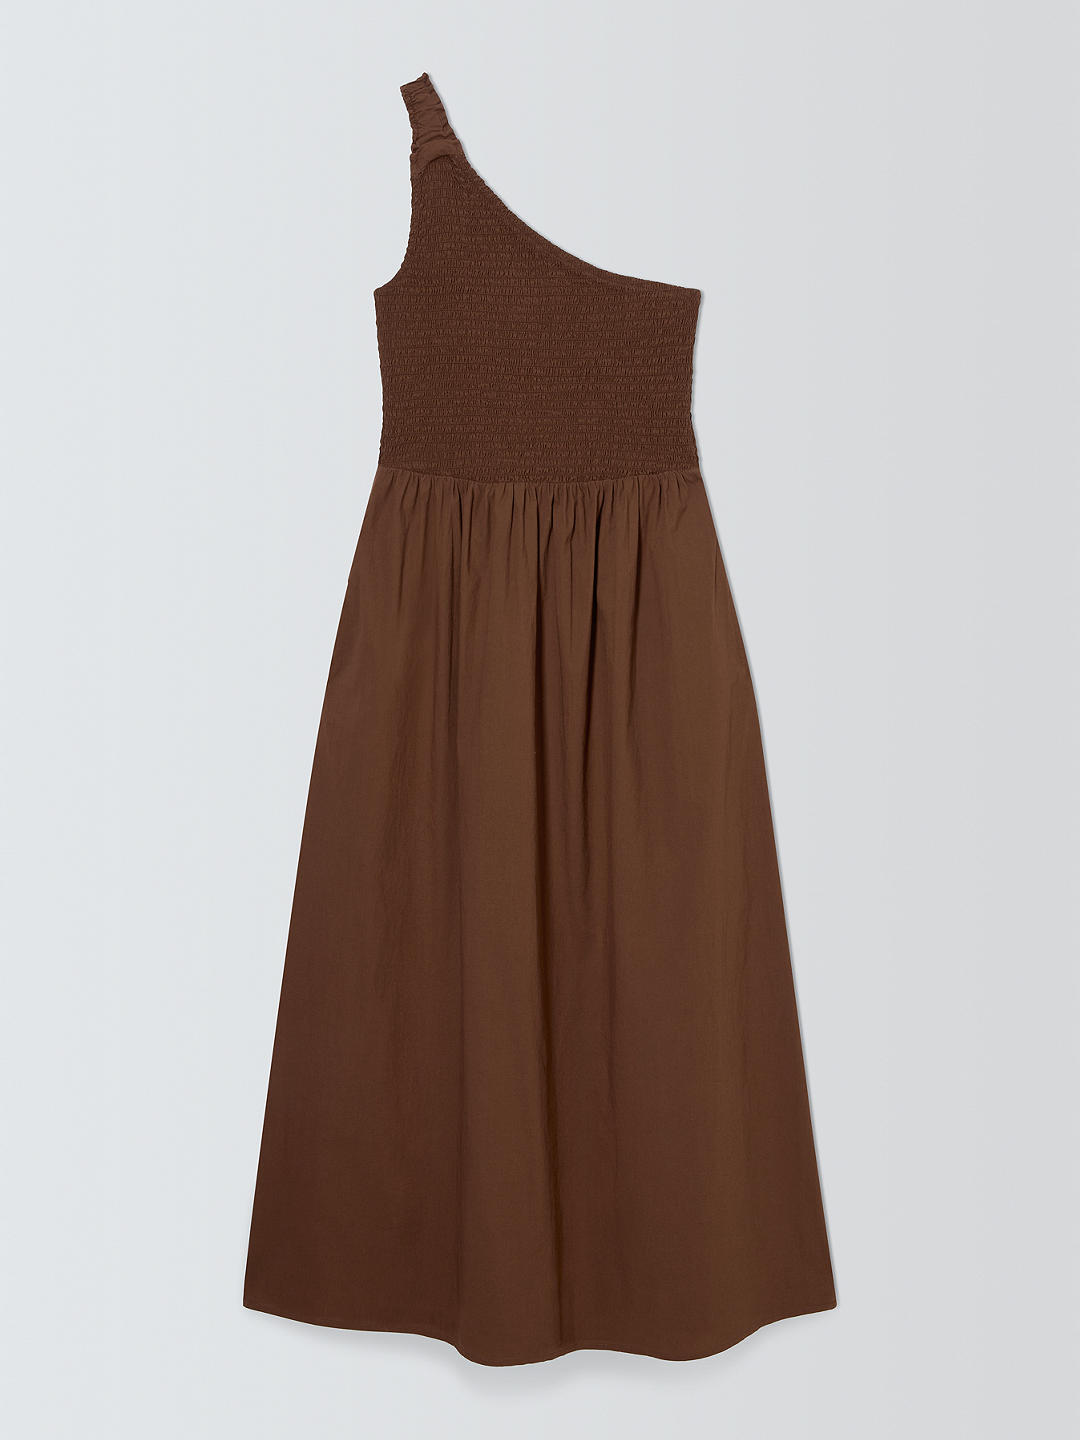 John Lewis ANYDAY Shirred Bodice Asymmetric Dress, Brown